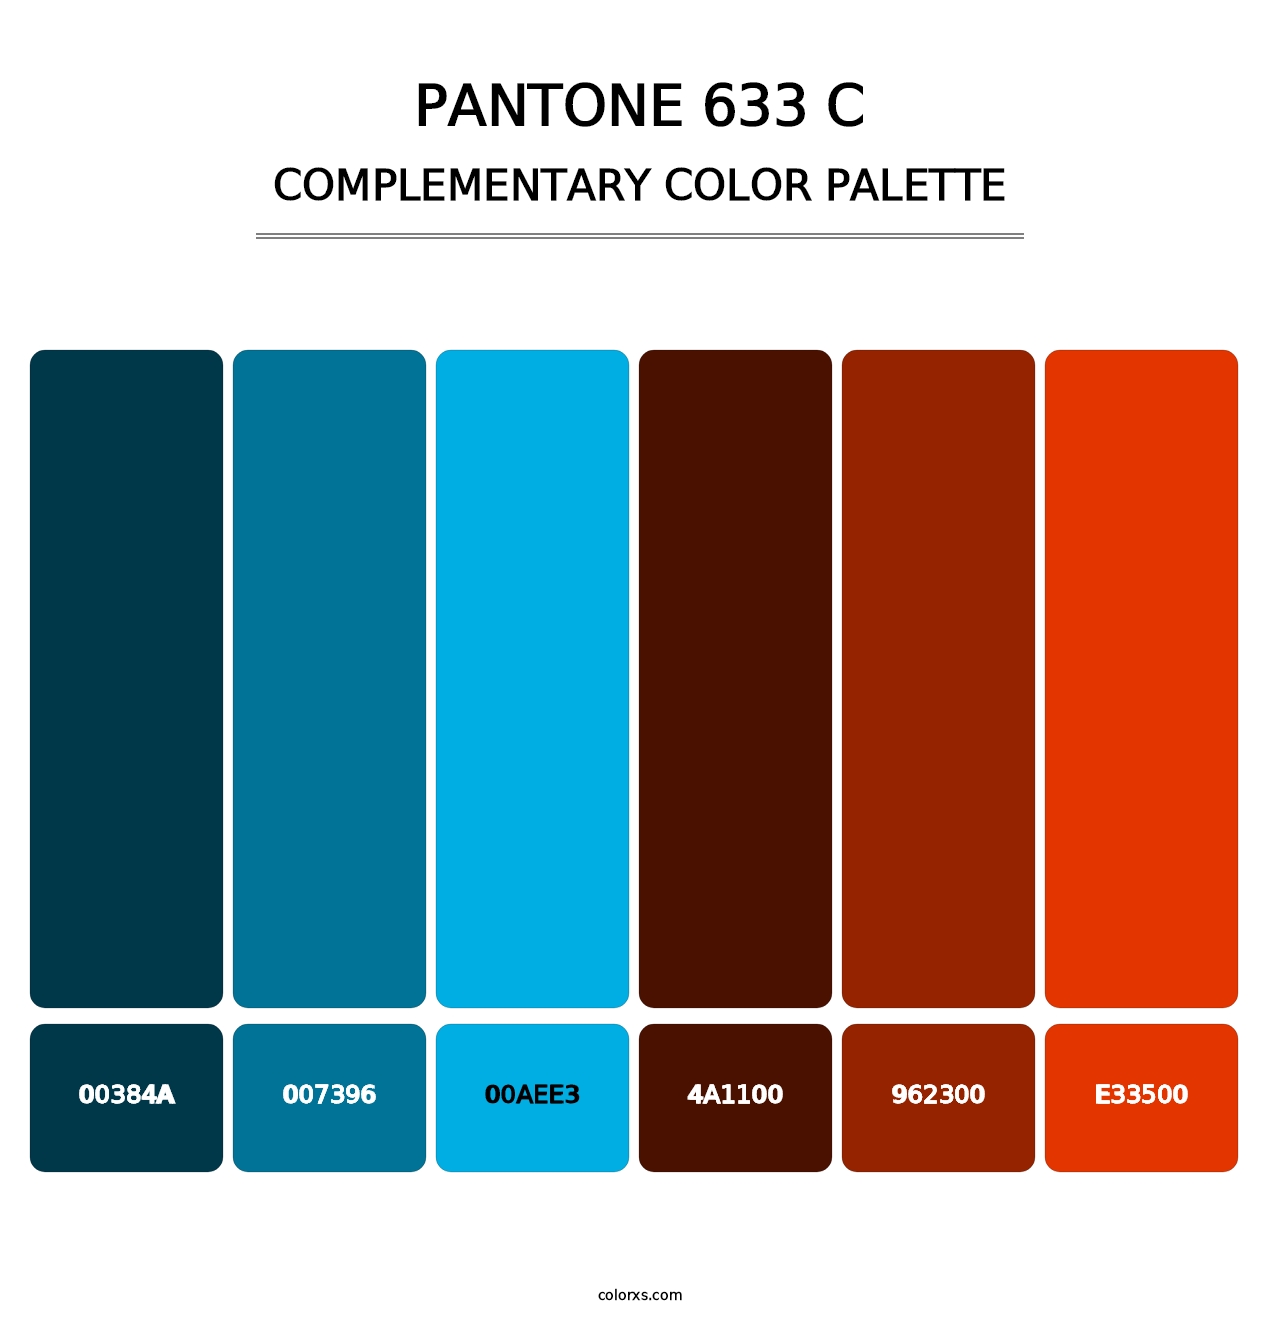 PANTONE 633 C - Complementary Color Palette